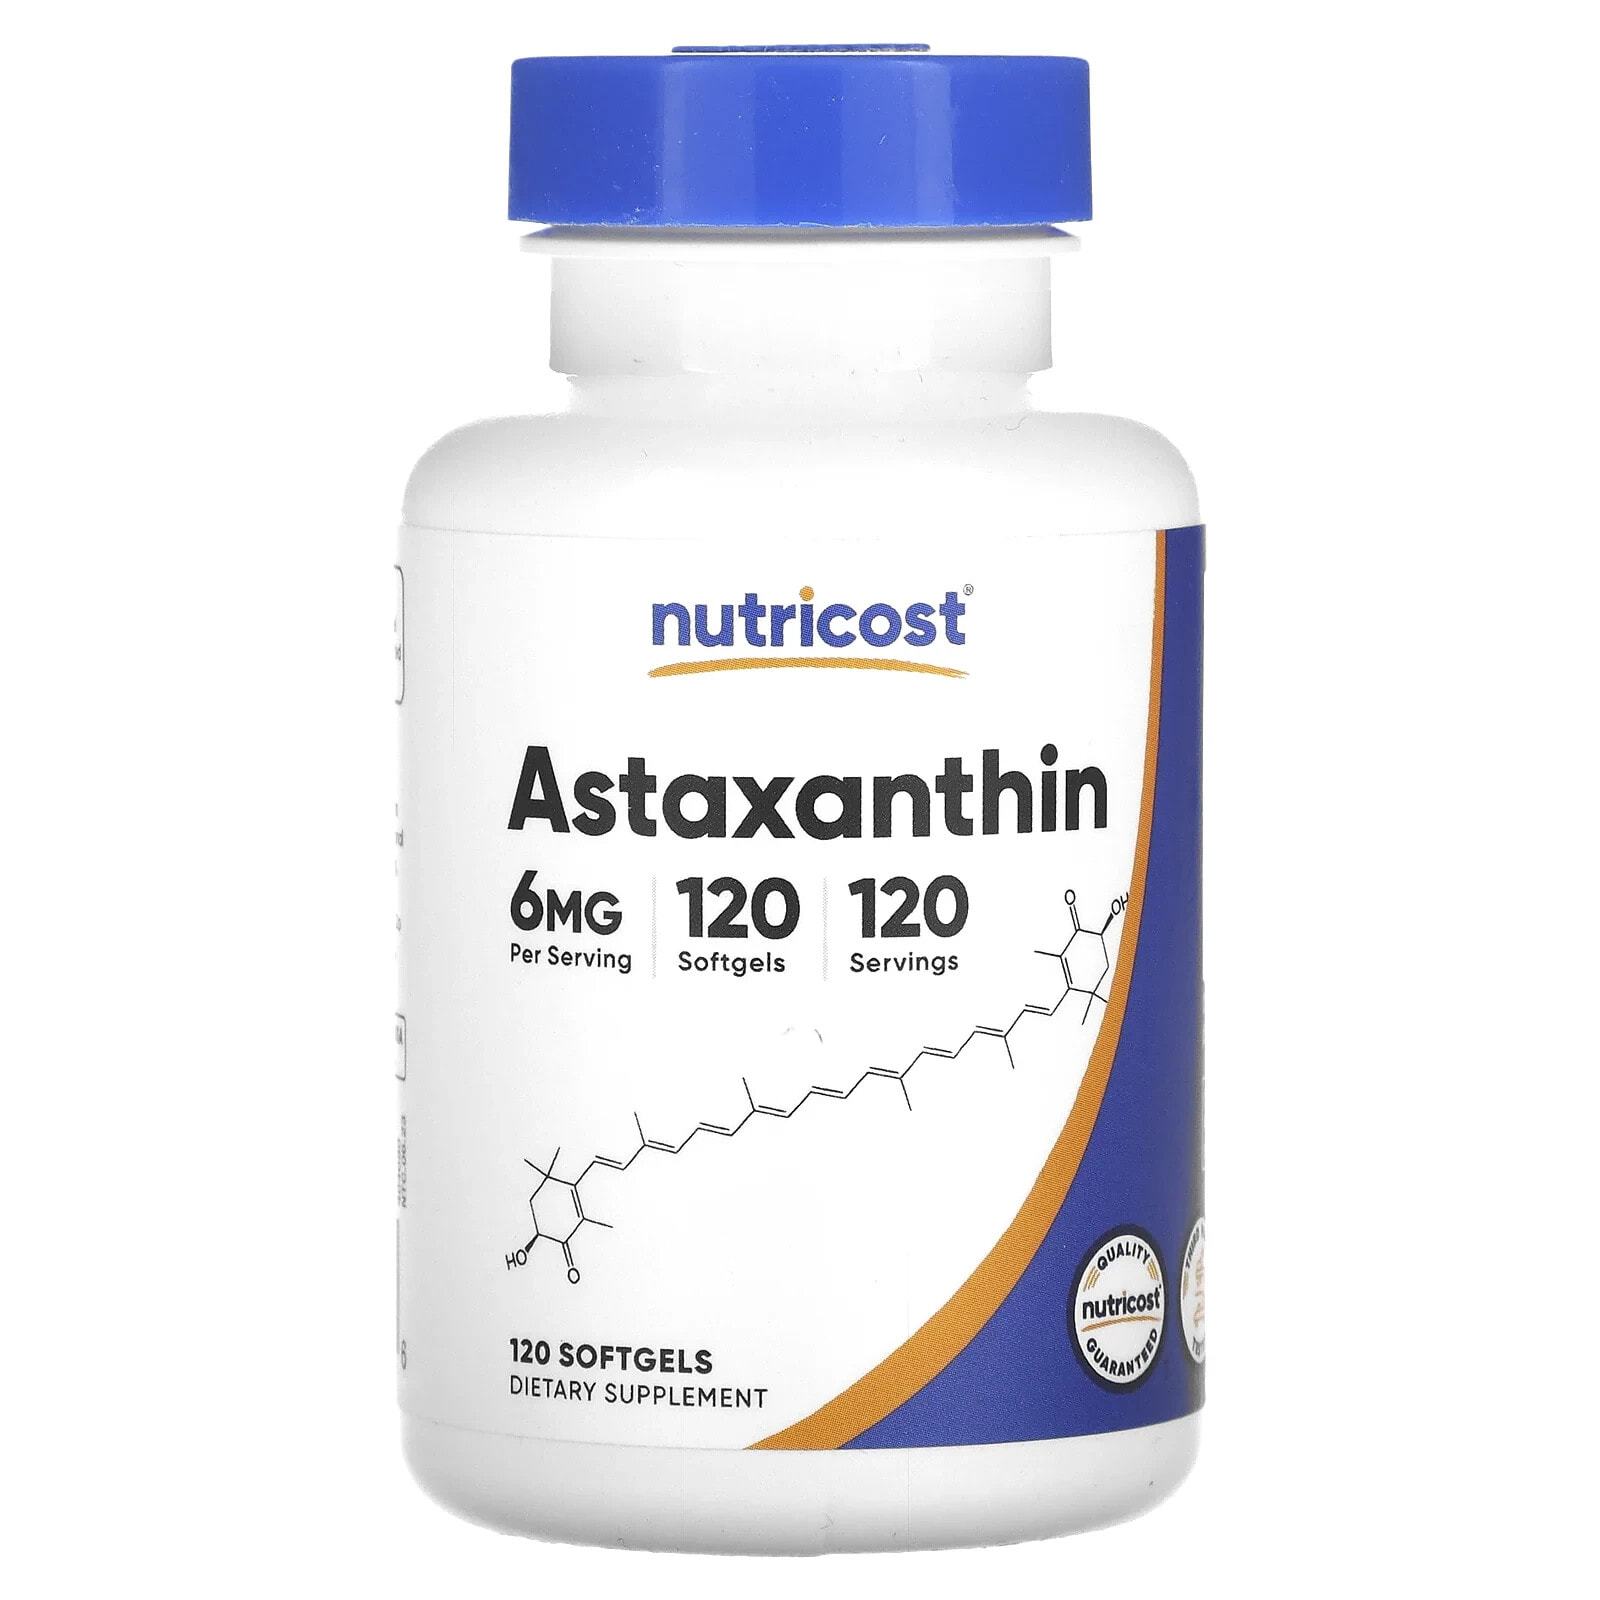 Astaxanthin , 12 mg , 60 Softgels